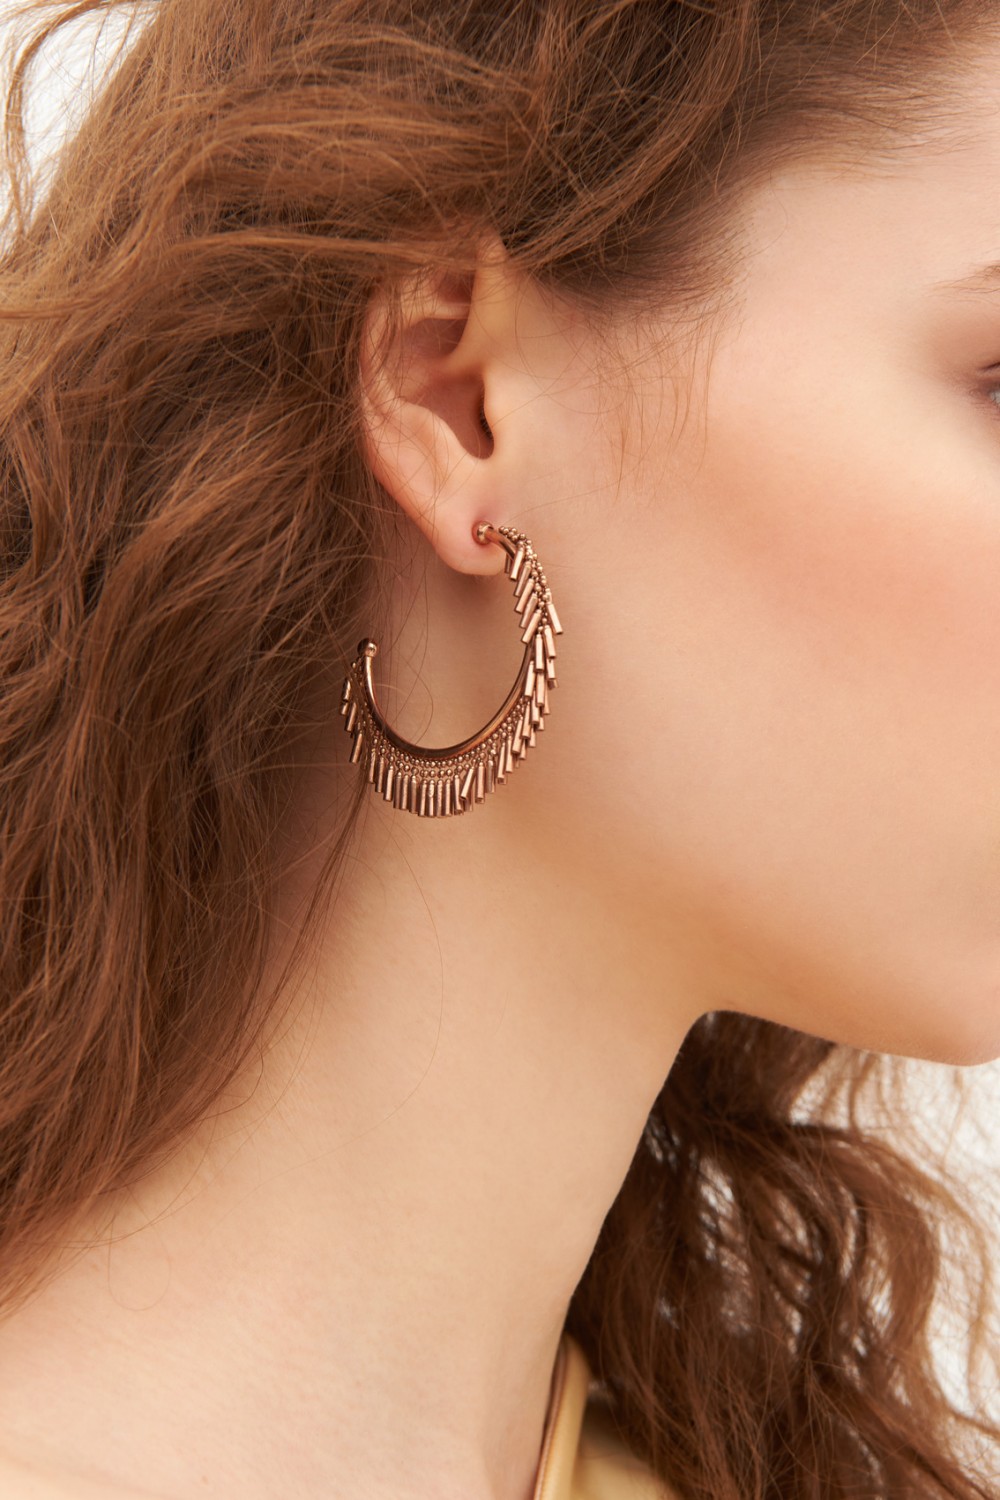 Long silver multi-pendent earrings